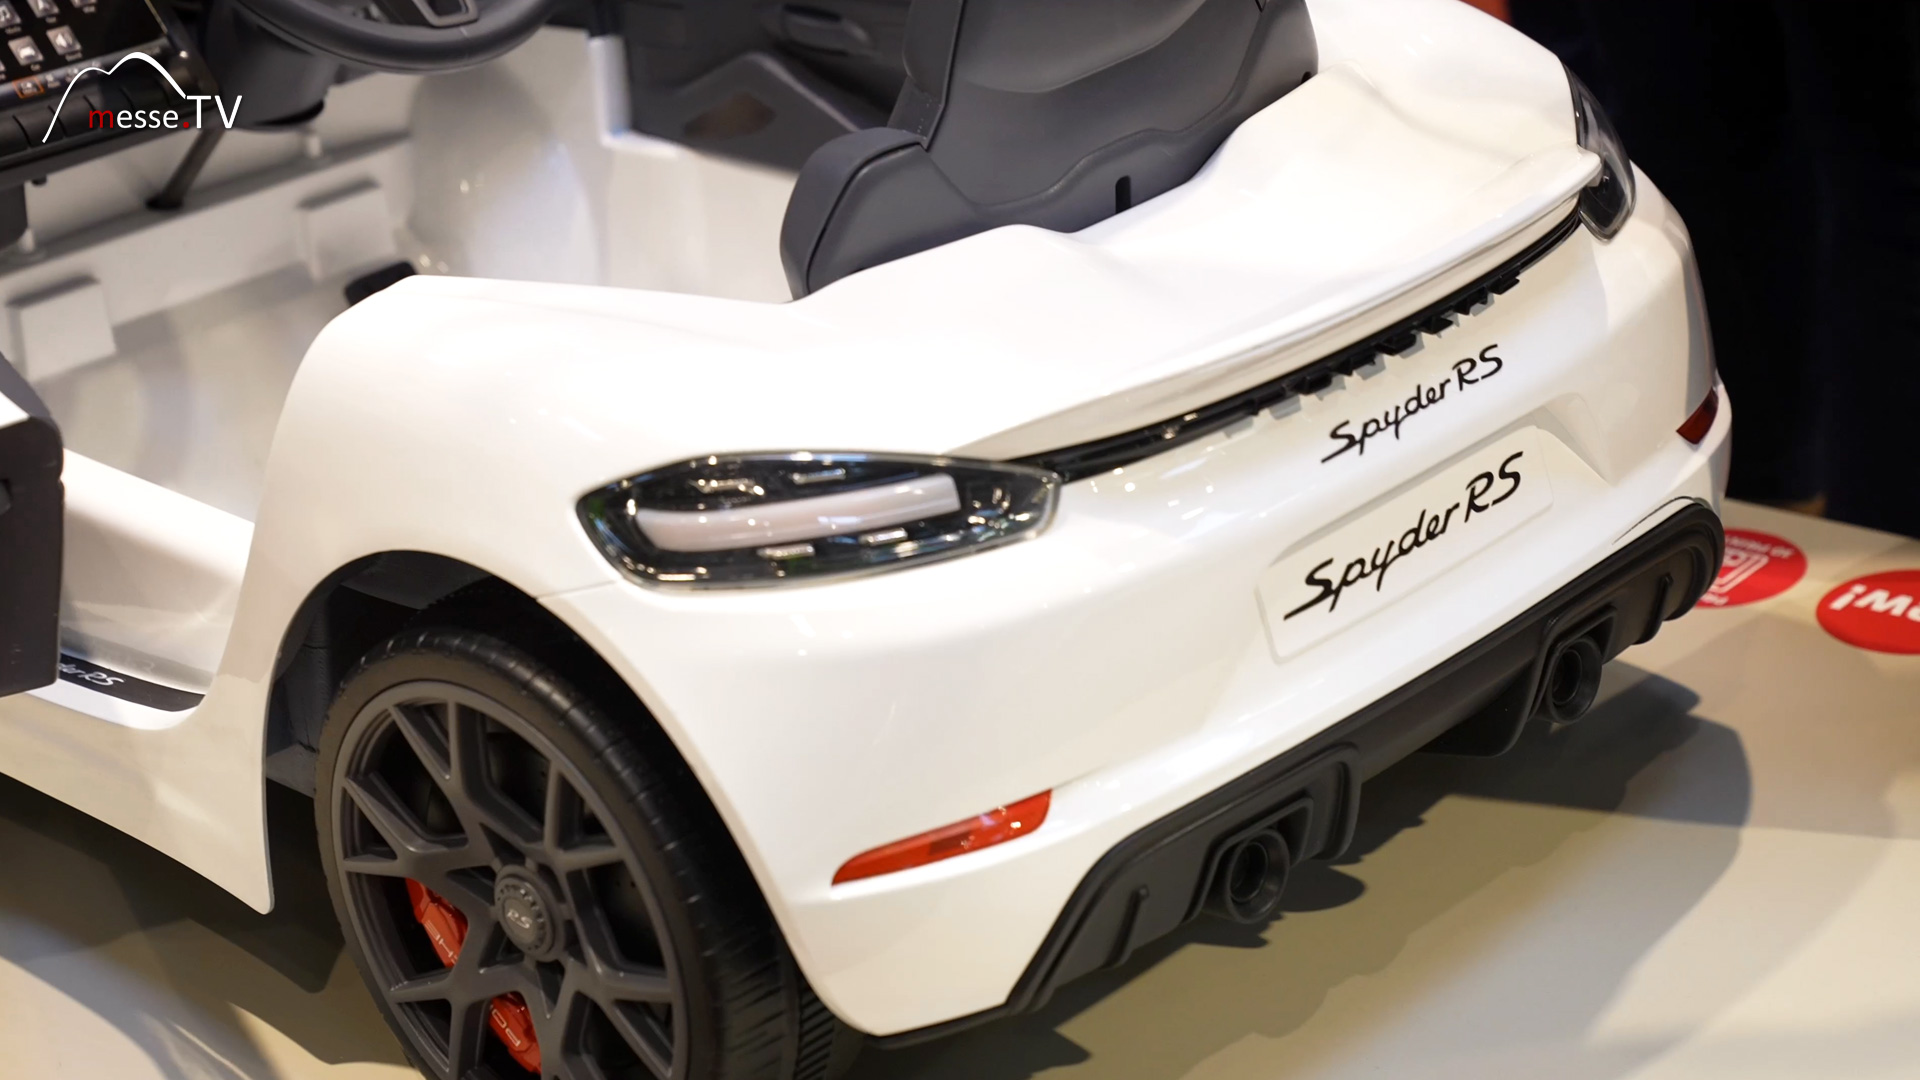 Porsche Spyder RS childrens electric vehicle